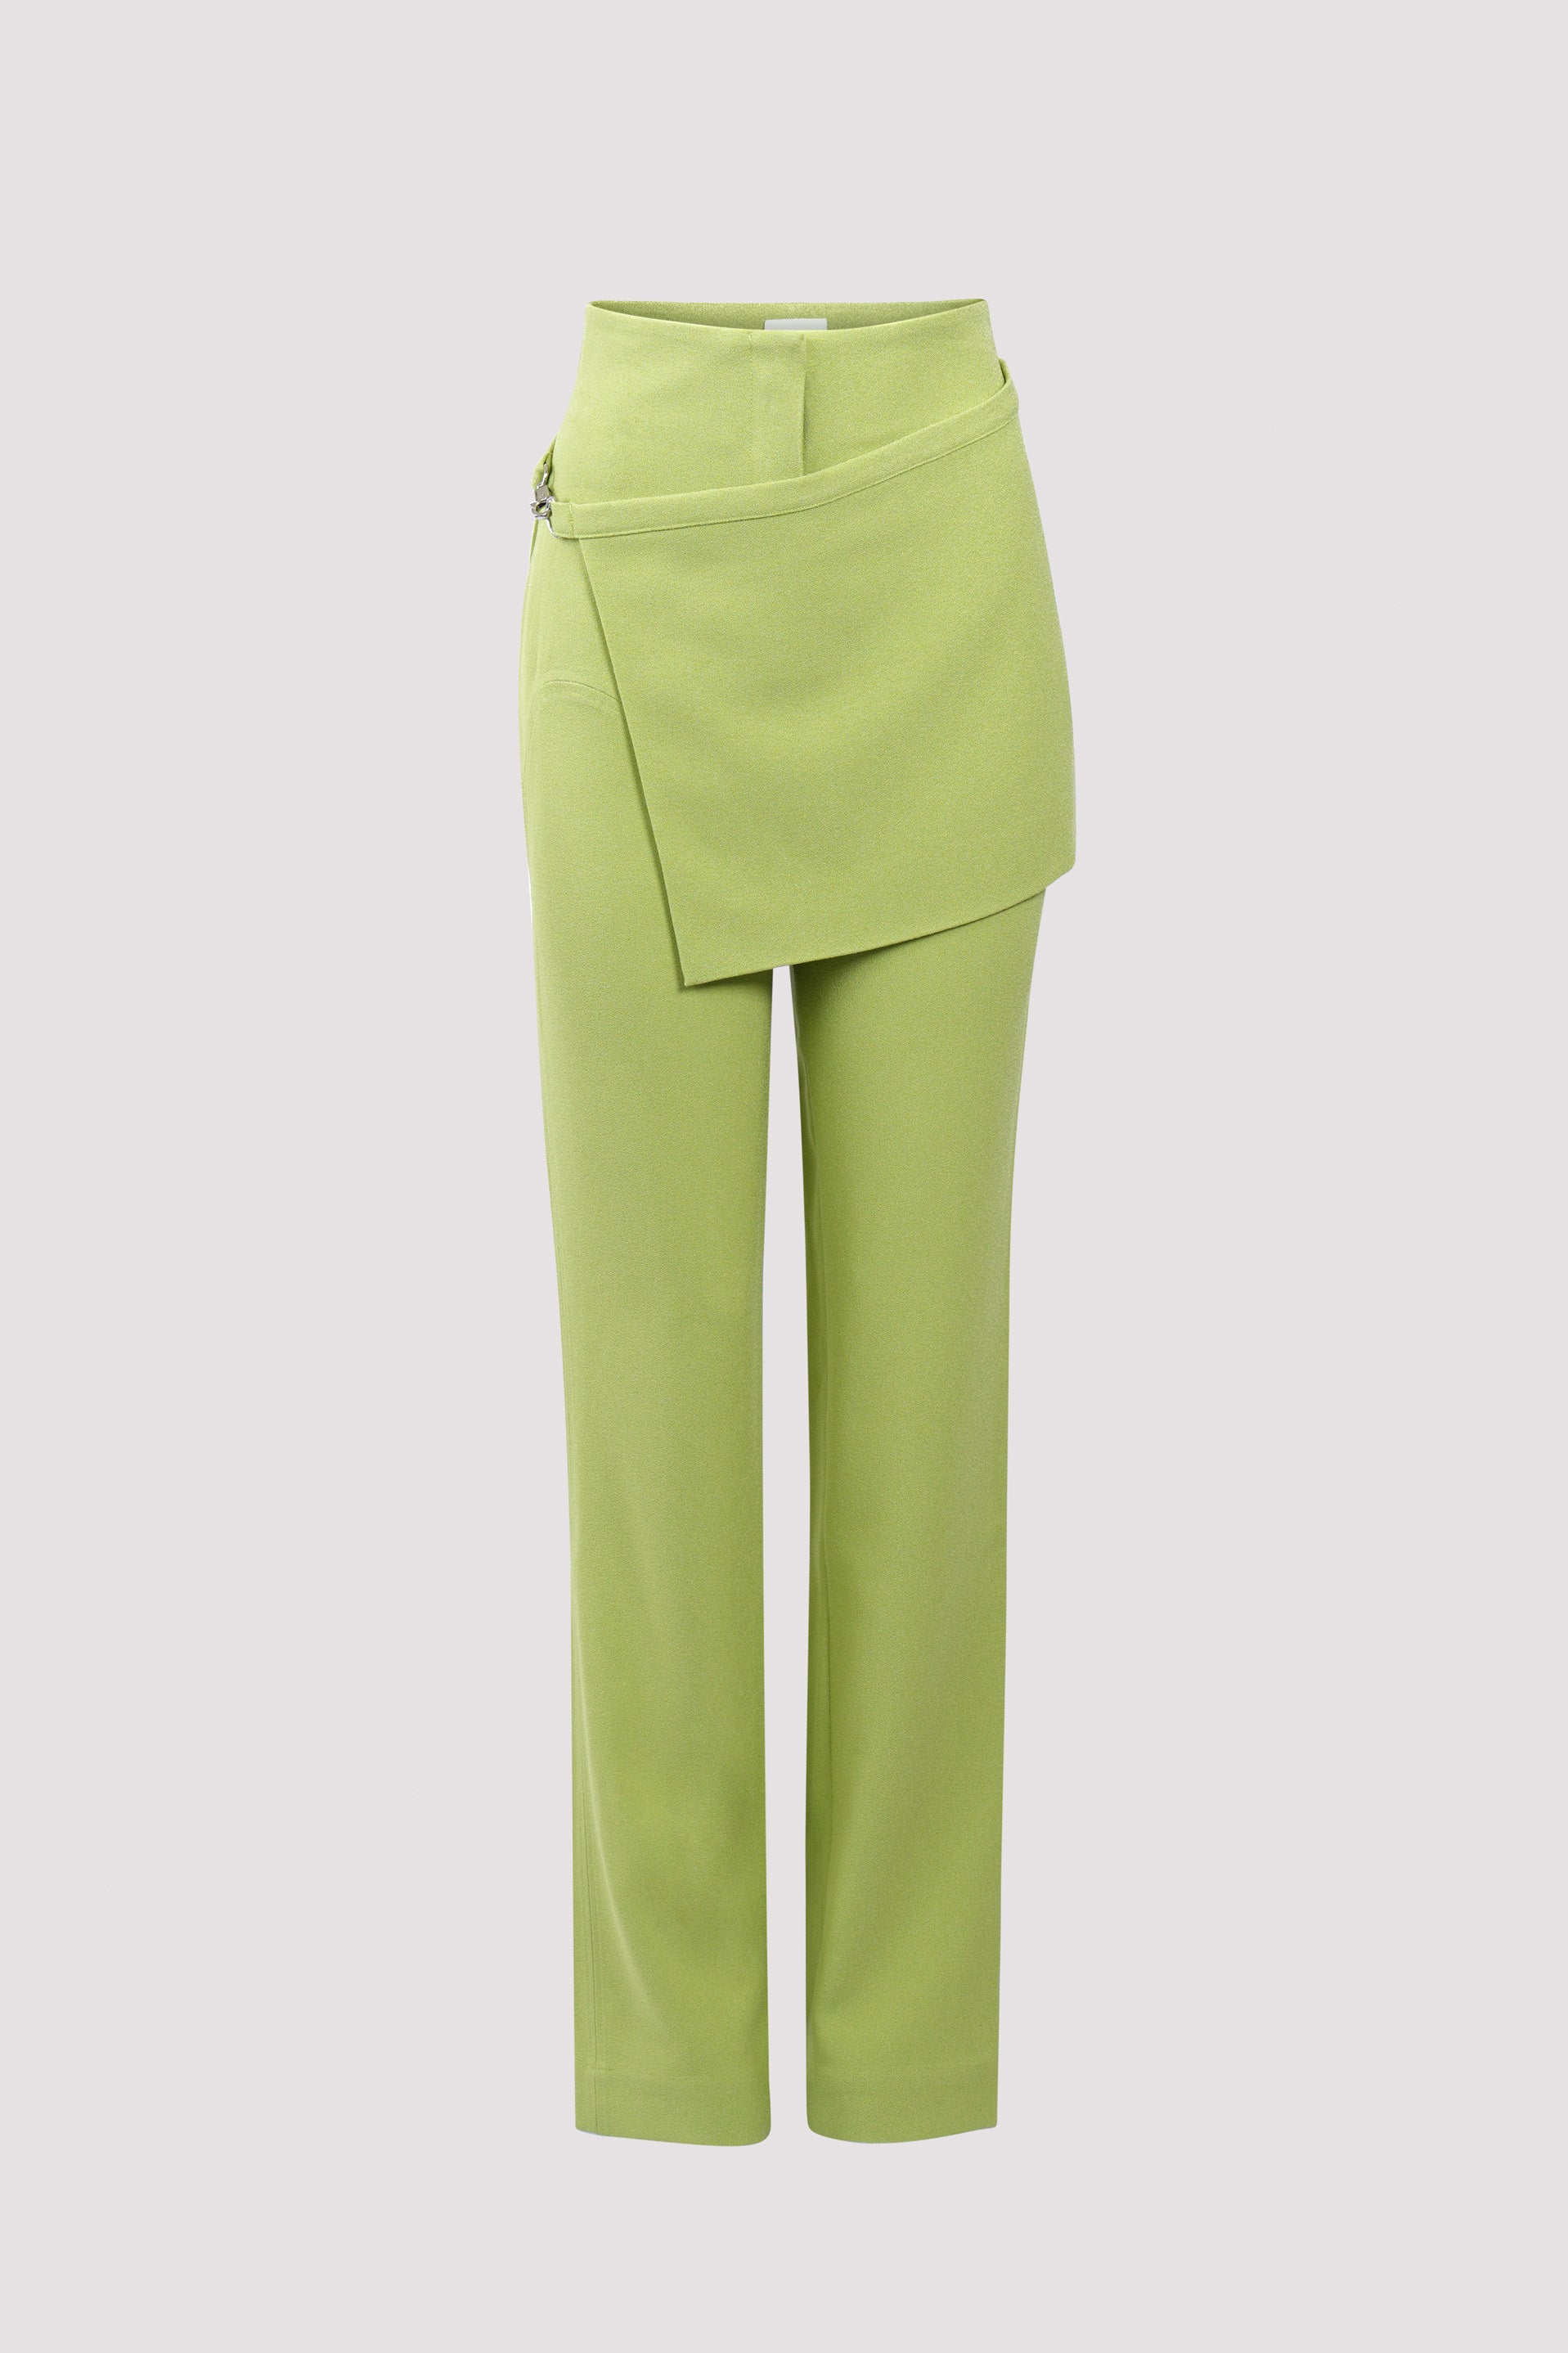 Paris Georgia Green Apron Suit Pants - Fabric of Society